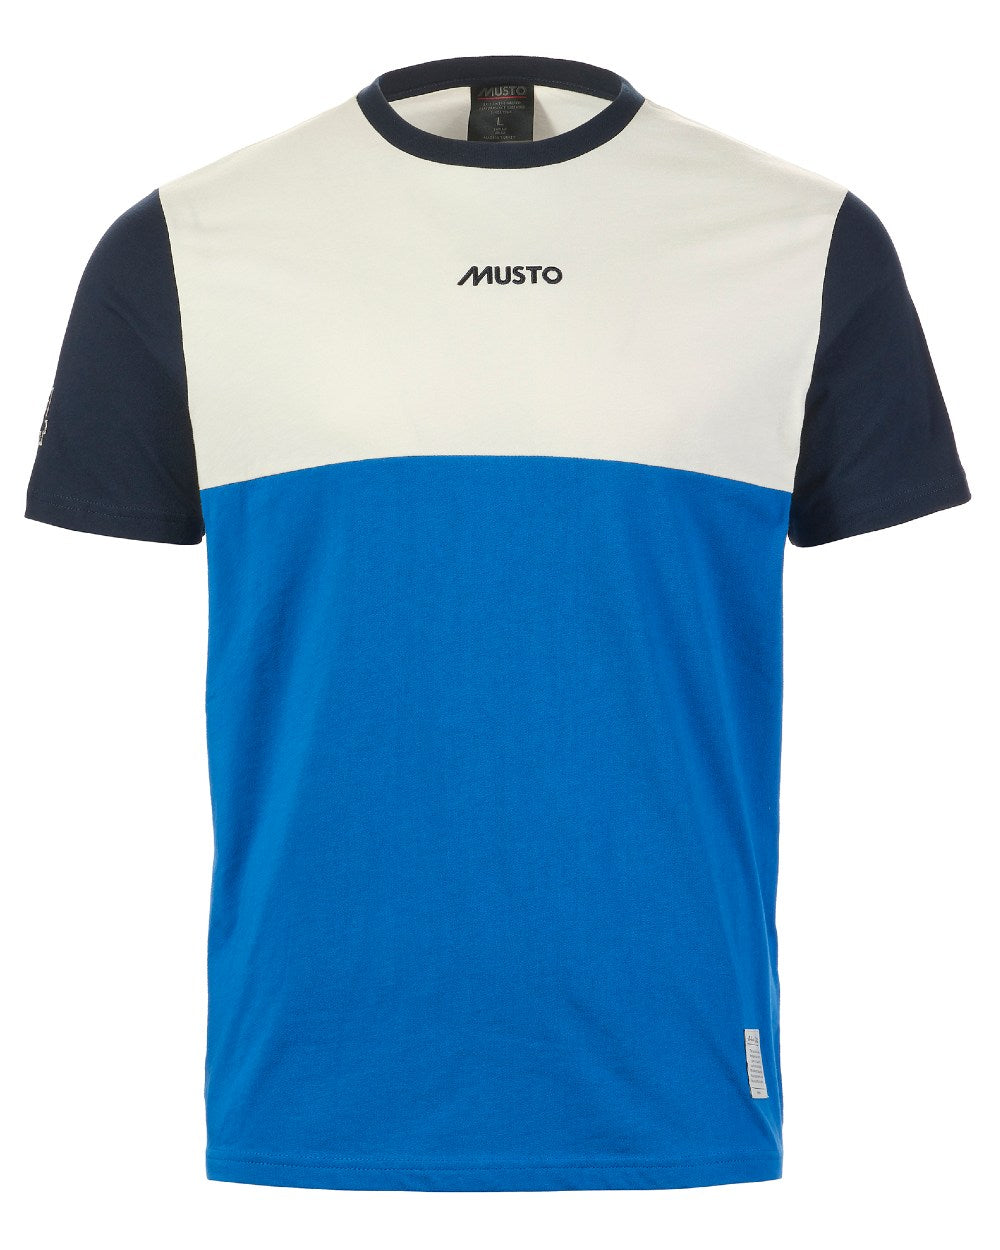 Aruba Blue Coloured Musto Mens 64 Short Sleeve T-Shirt On A White Background 